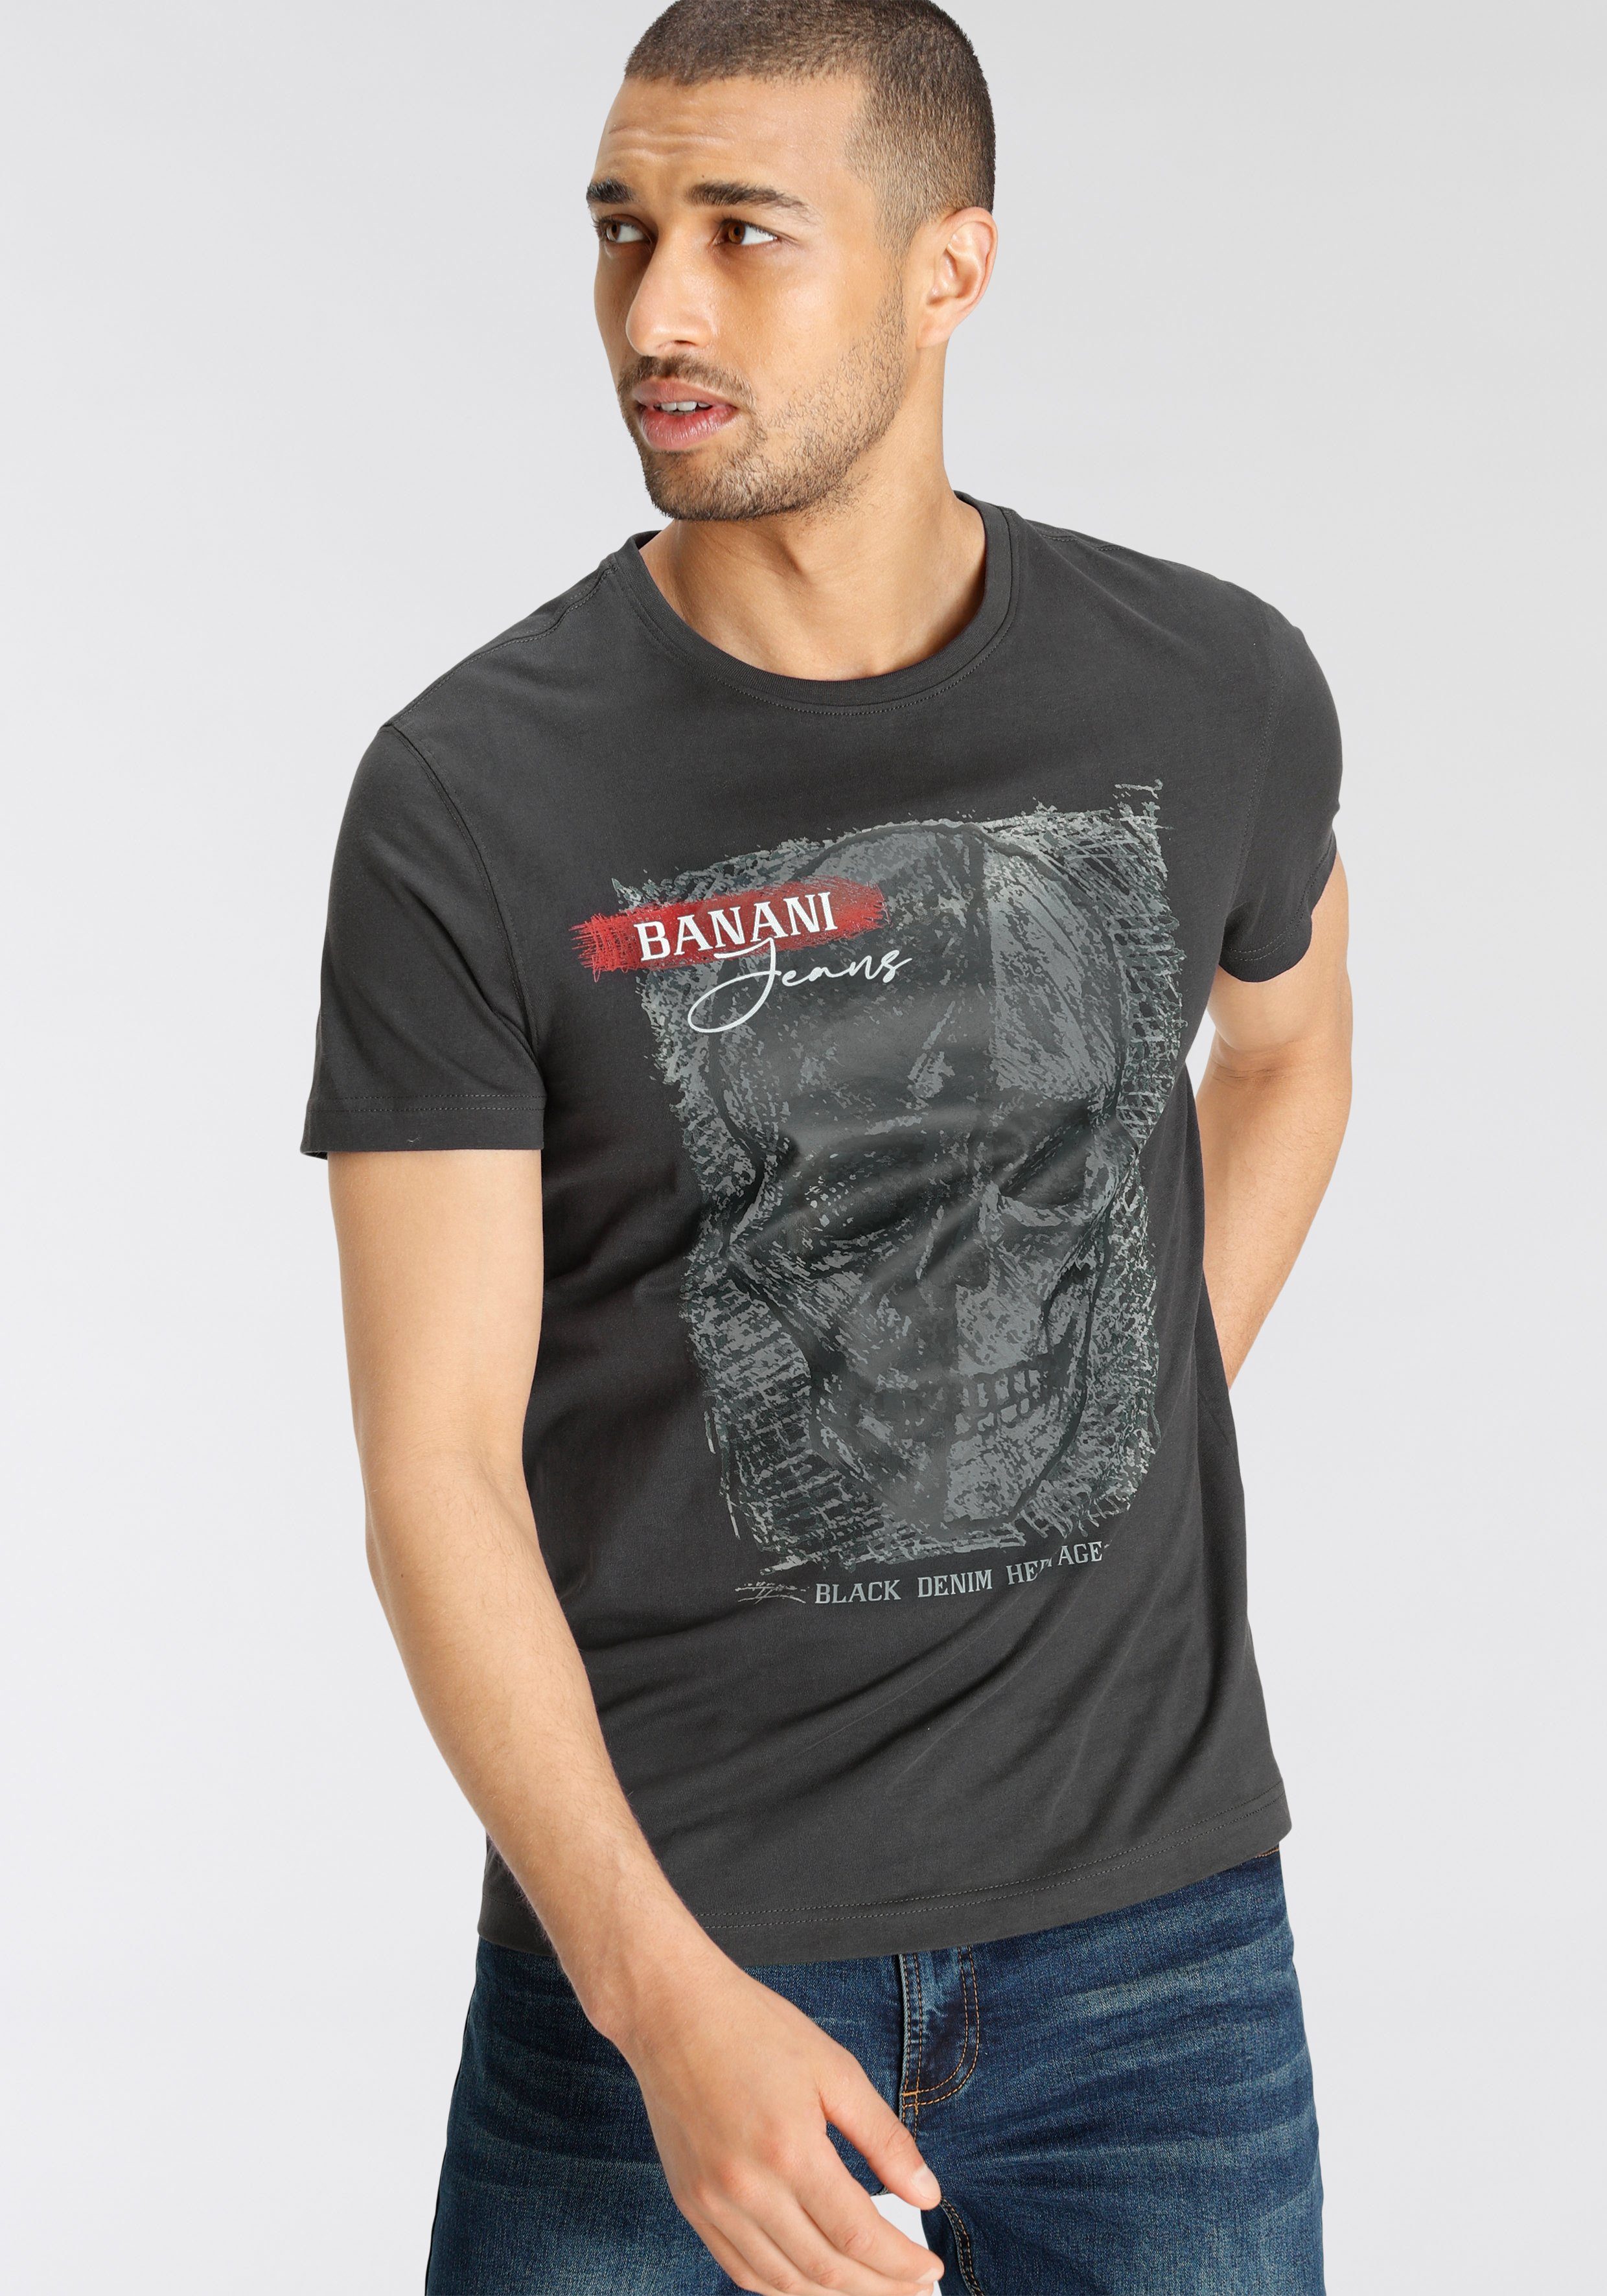 T-Shirt Bruno Frontprint großem mit Banani